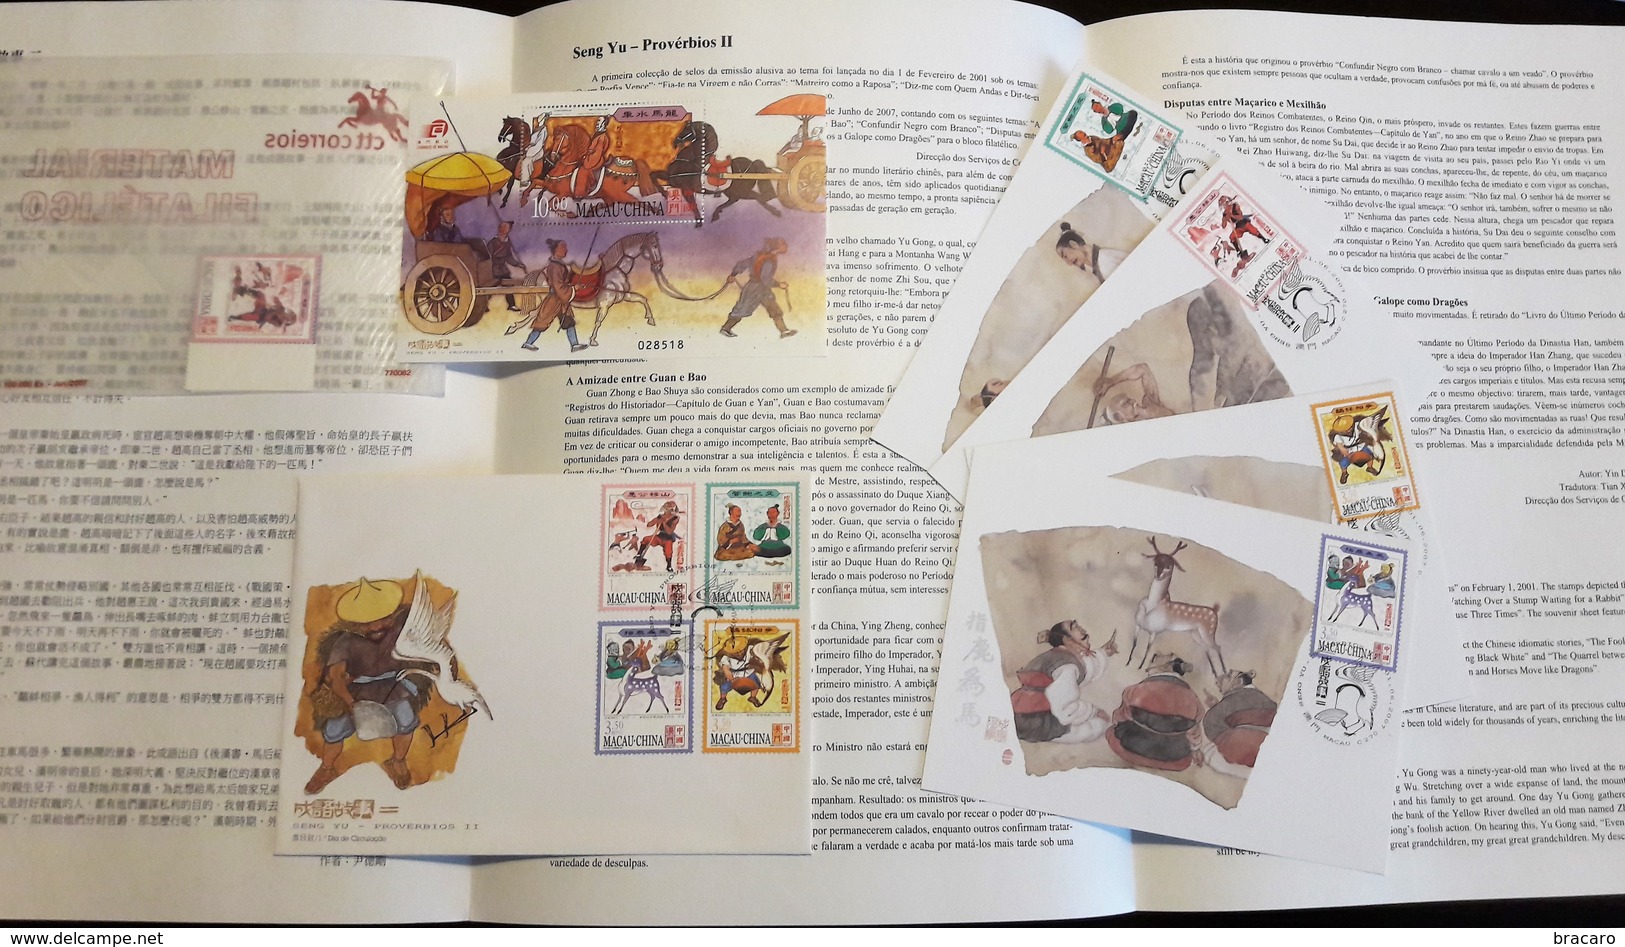 MACAU / MACAO (CHINA) - Seng Yu - Idioms II - 2007 - Stamps (full Set) MNH + Block MNH + FDC + 4 Maximum Cards + Leaflet - Collections, Lots & Séries